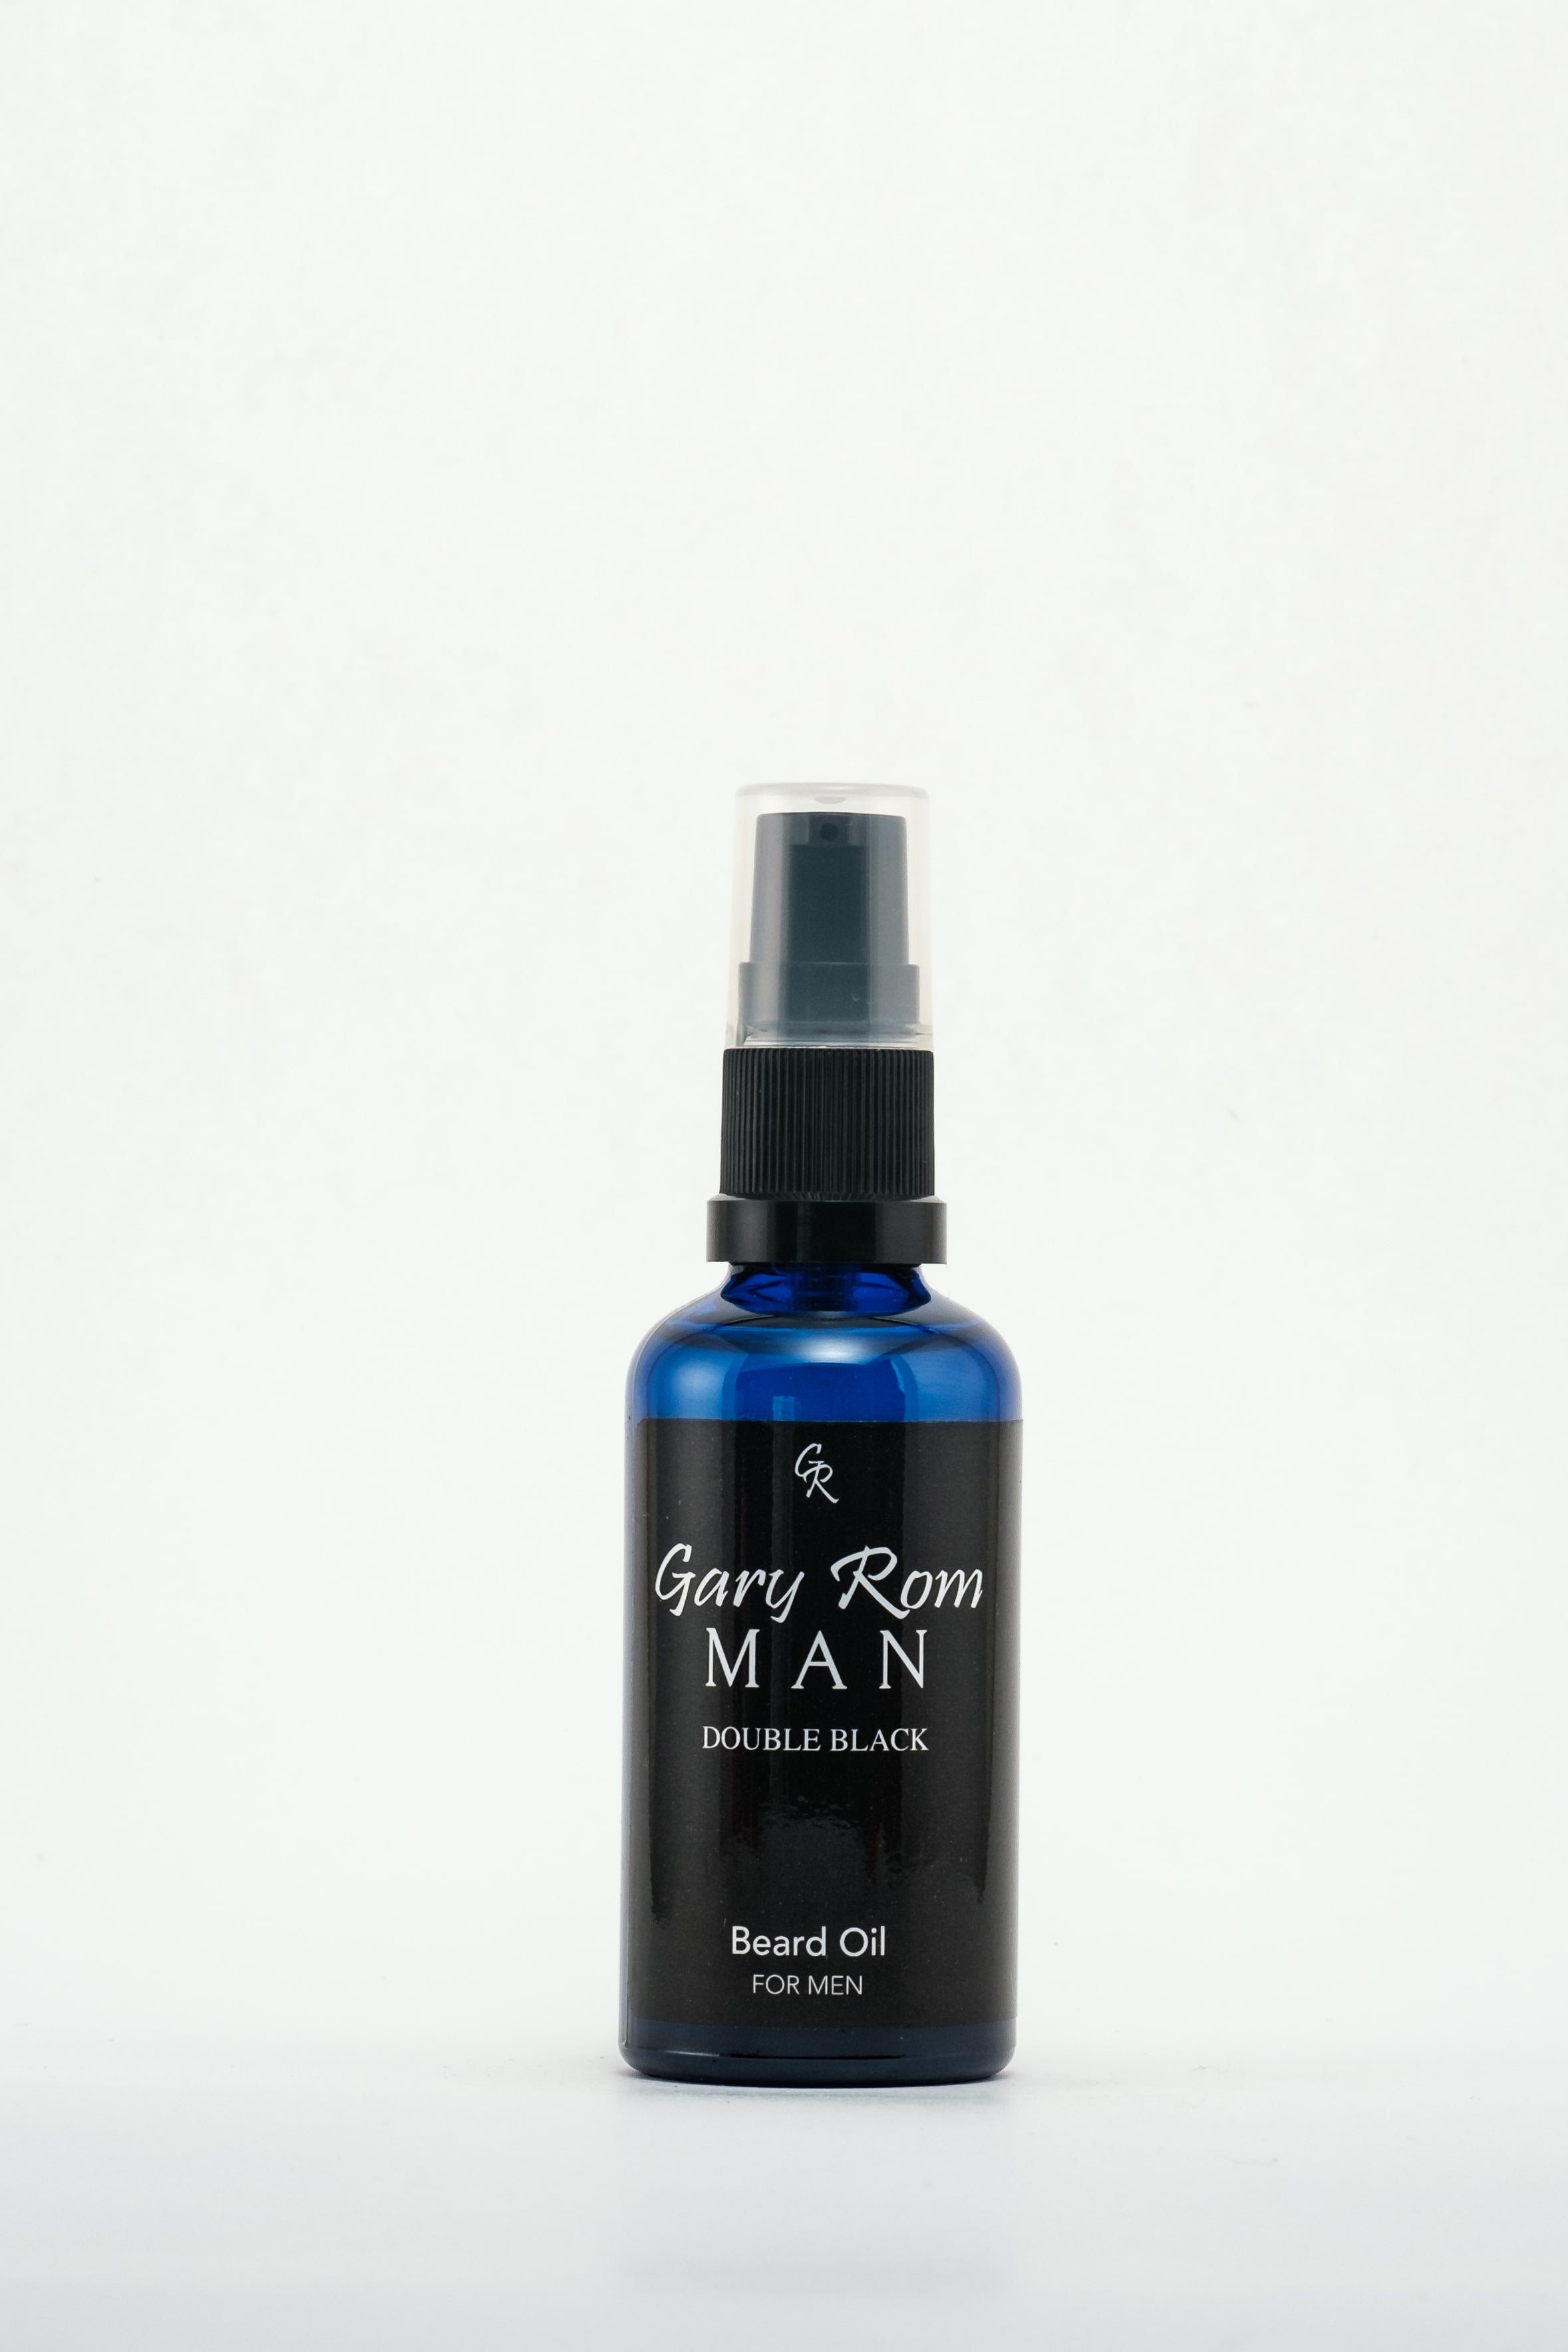 Gary Rom Man Double Black Beard Oil